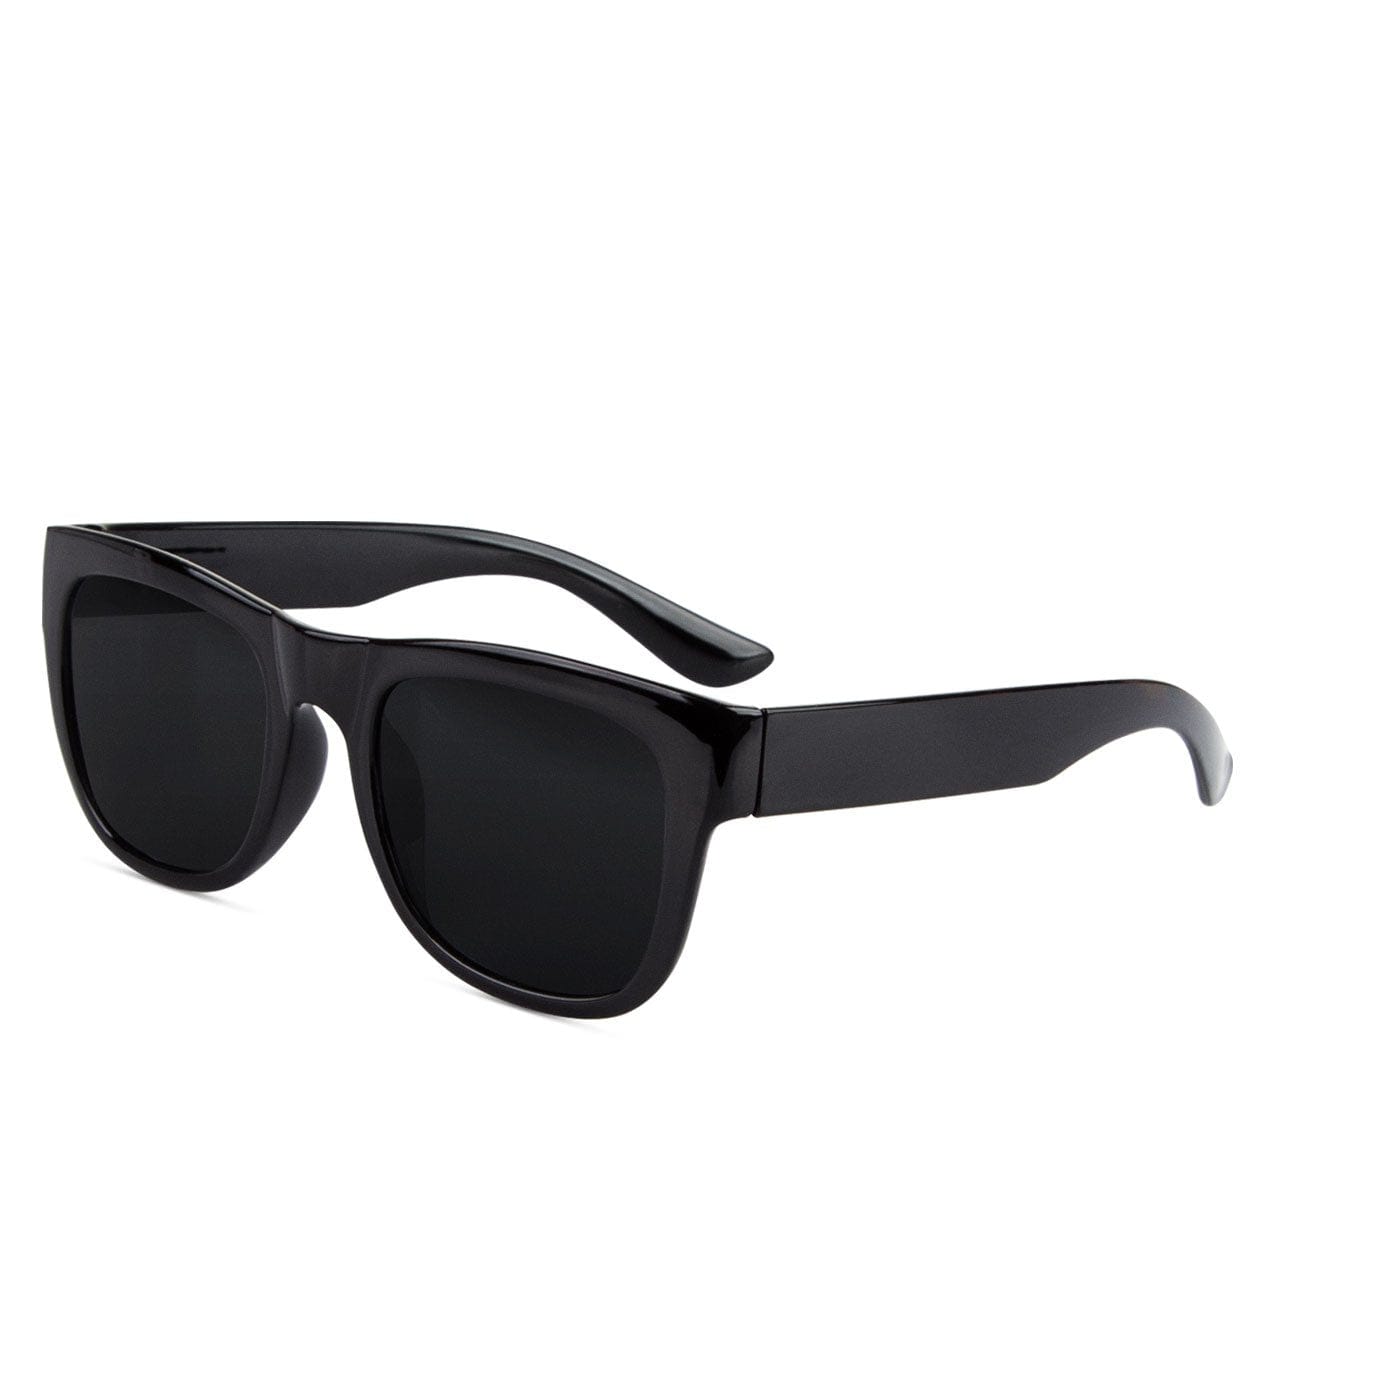 Makai Shinny Black / Black Sunglasses